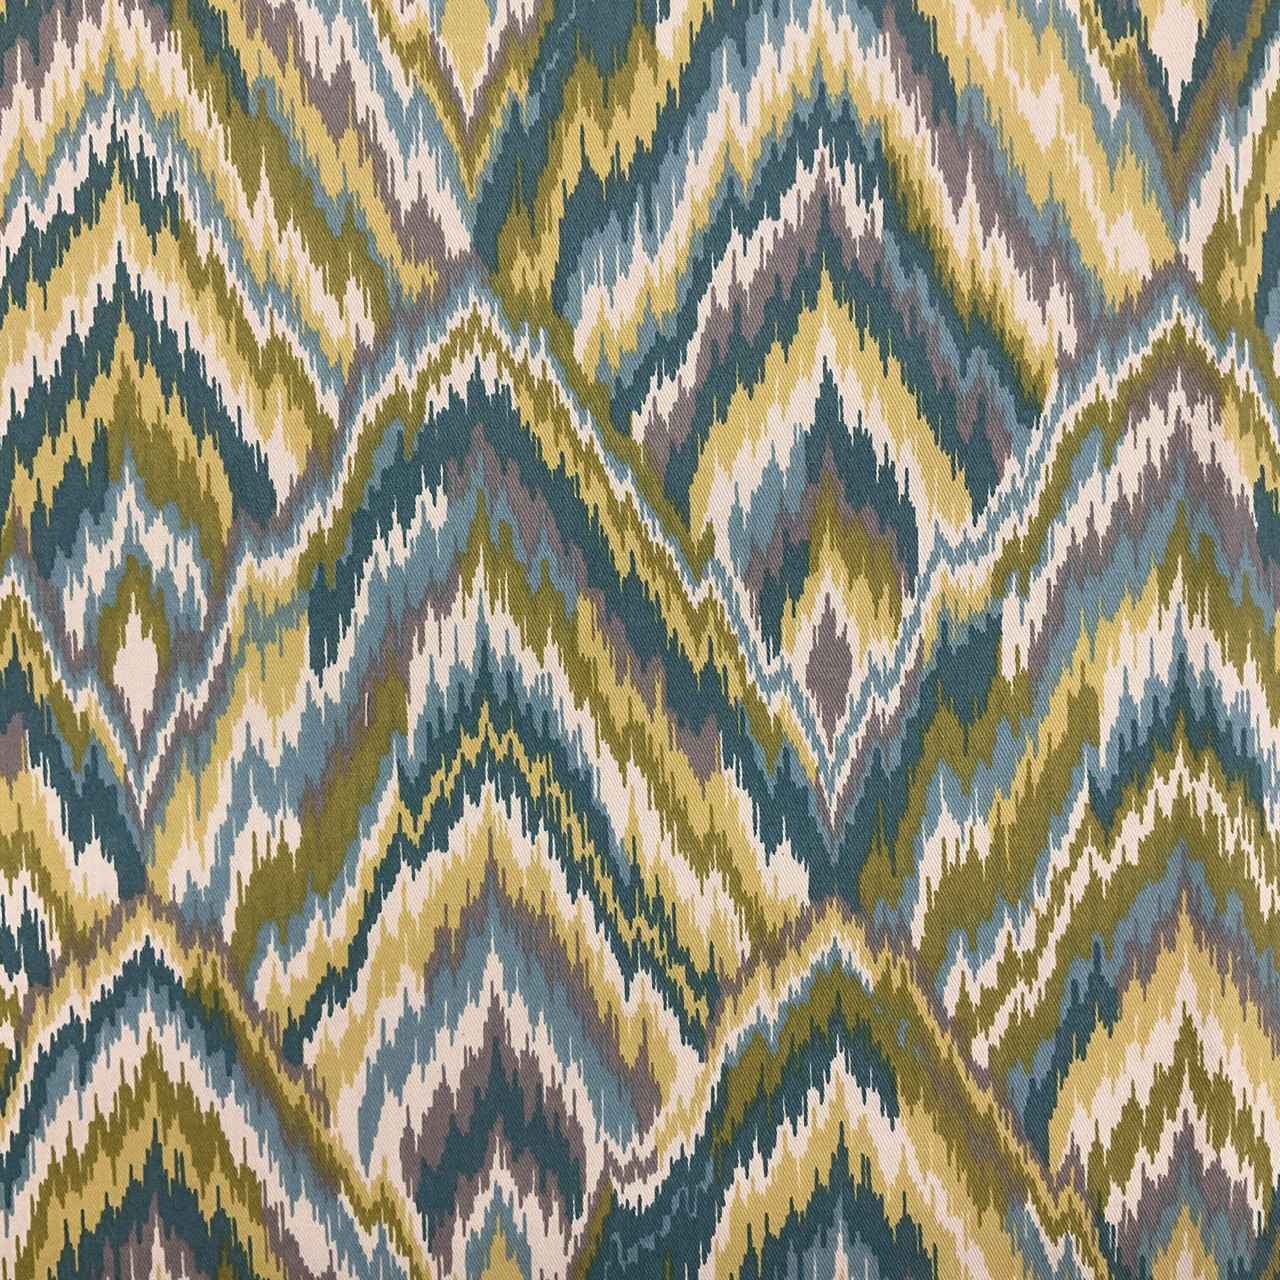 Schumacher Fabric by the yard / 54 wide Fabric / Light Yellow